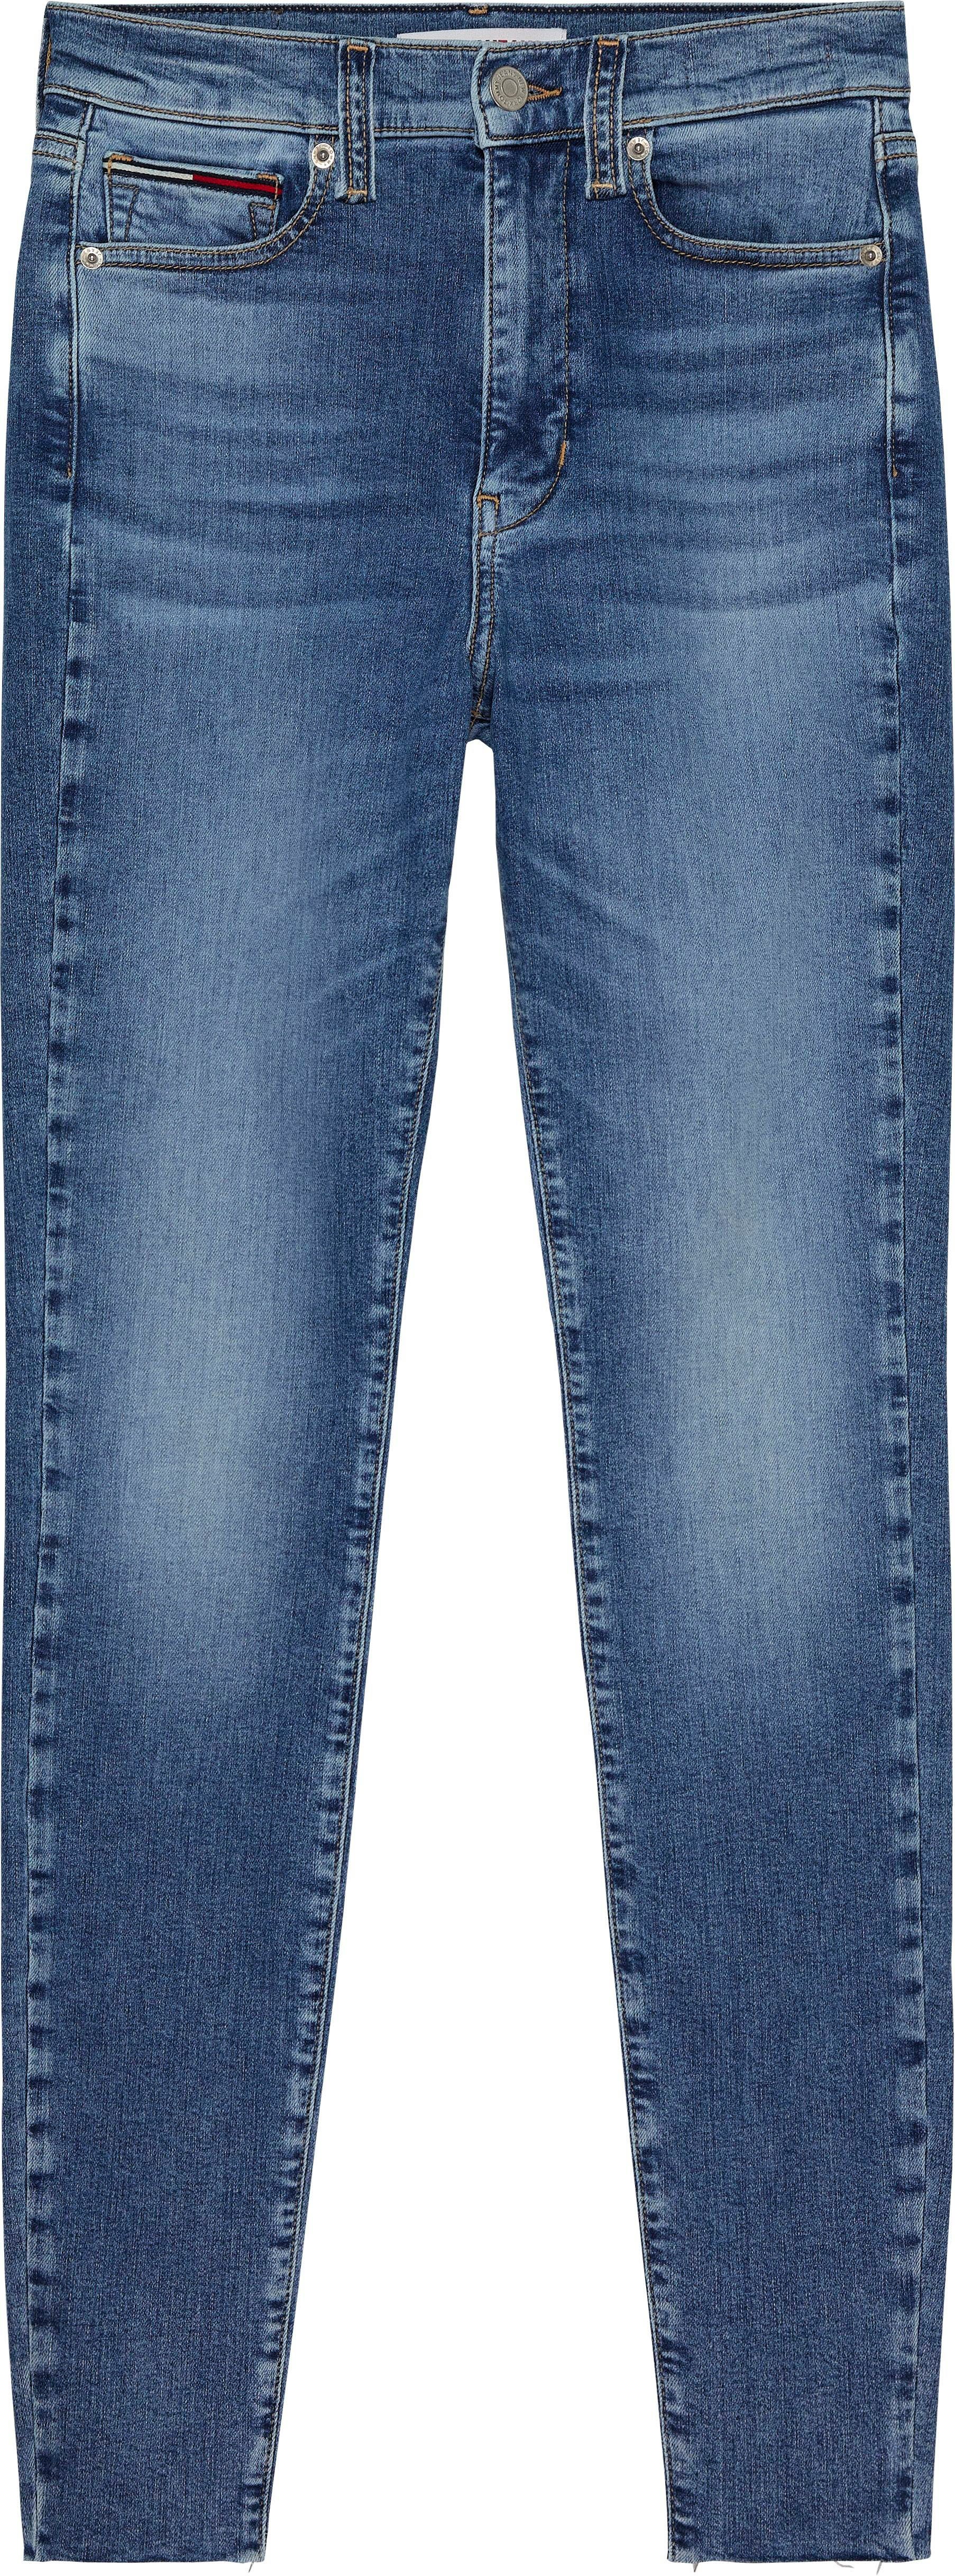 denim_medium1 Labelflags Jeans SSKN mit Logobadge Jeans SYLVIA Skinny-fit-Jeans HR Tommy und CG4